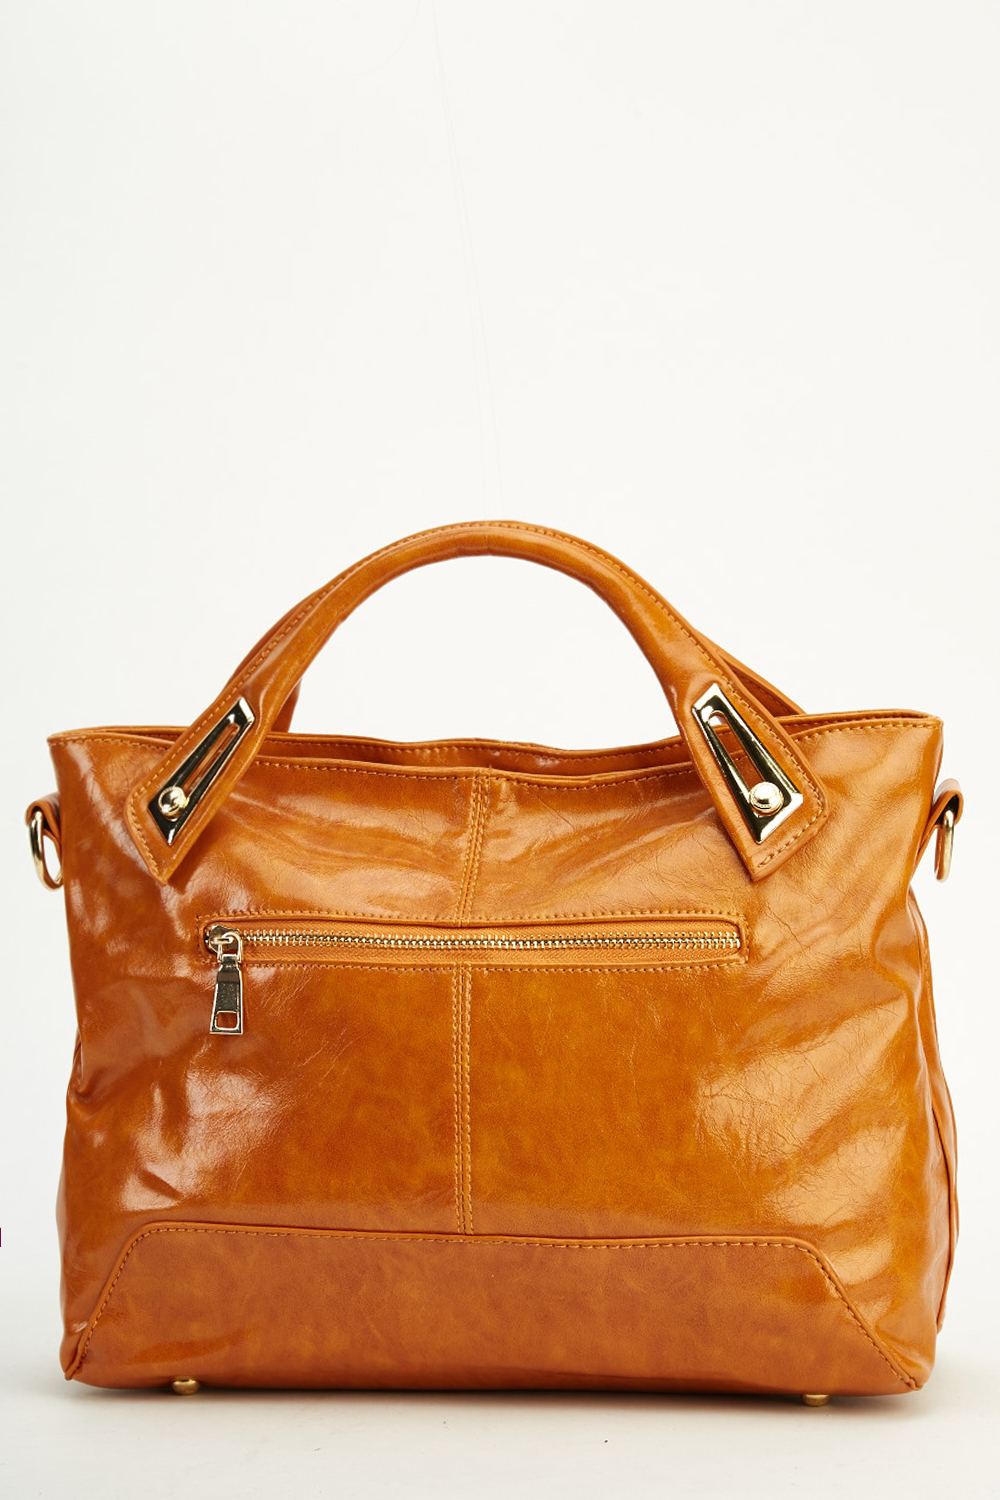 Faux Leather Light Camel Handbag - Just $7